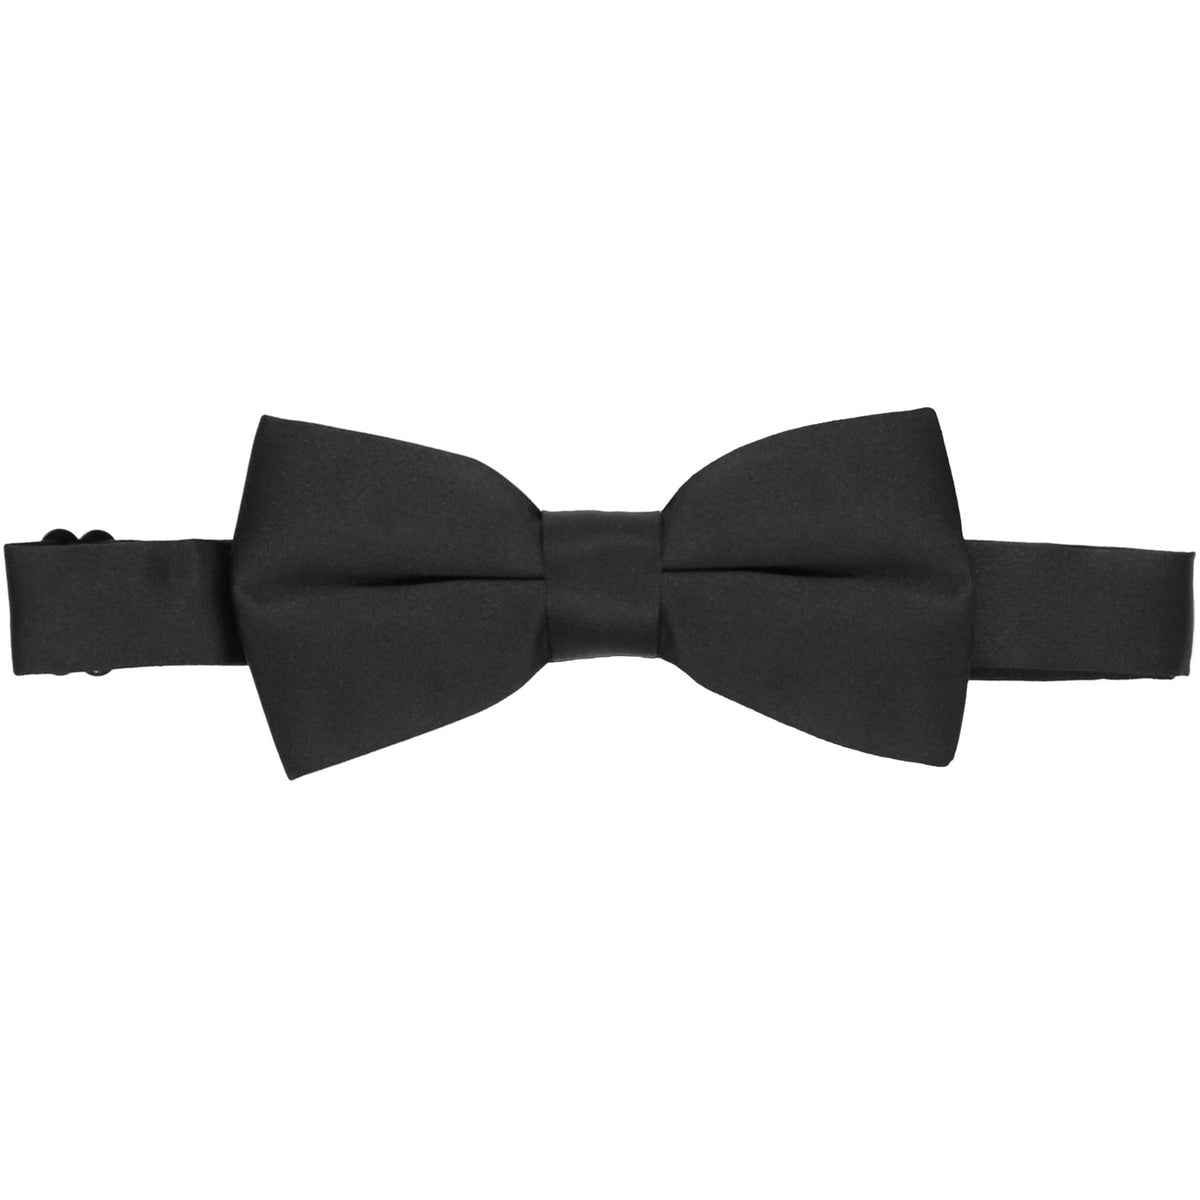 Black Bow Ties - Bulk Quantities - Huge Discounts | Shop at TieMart ...